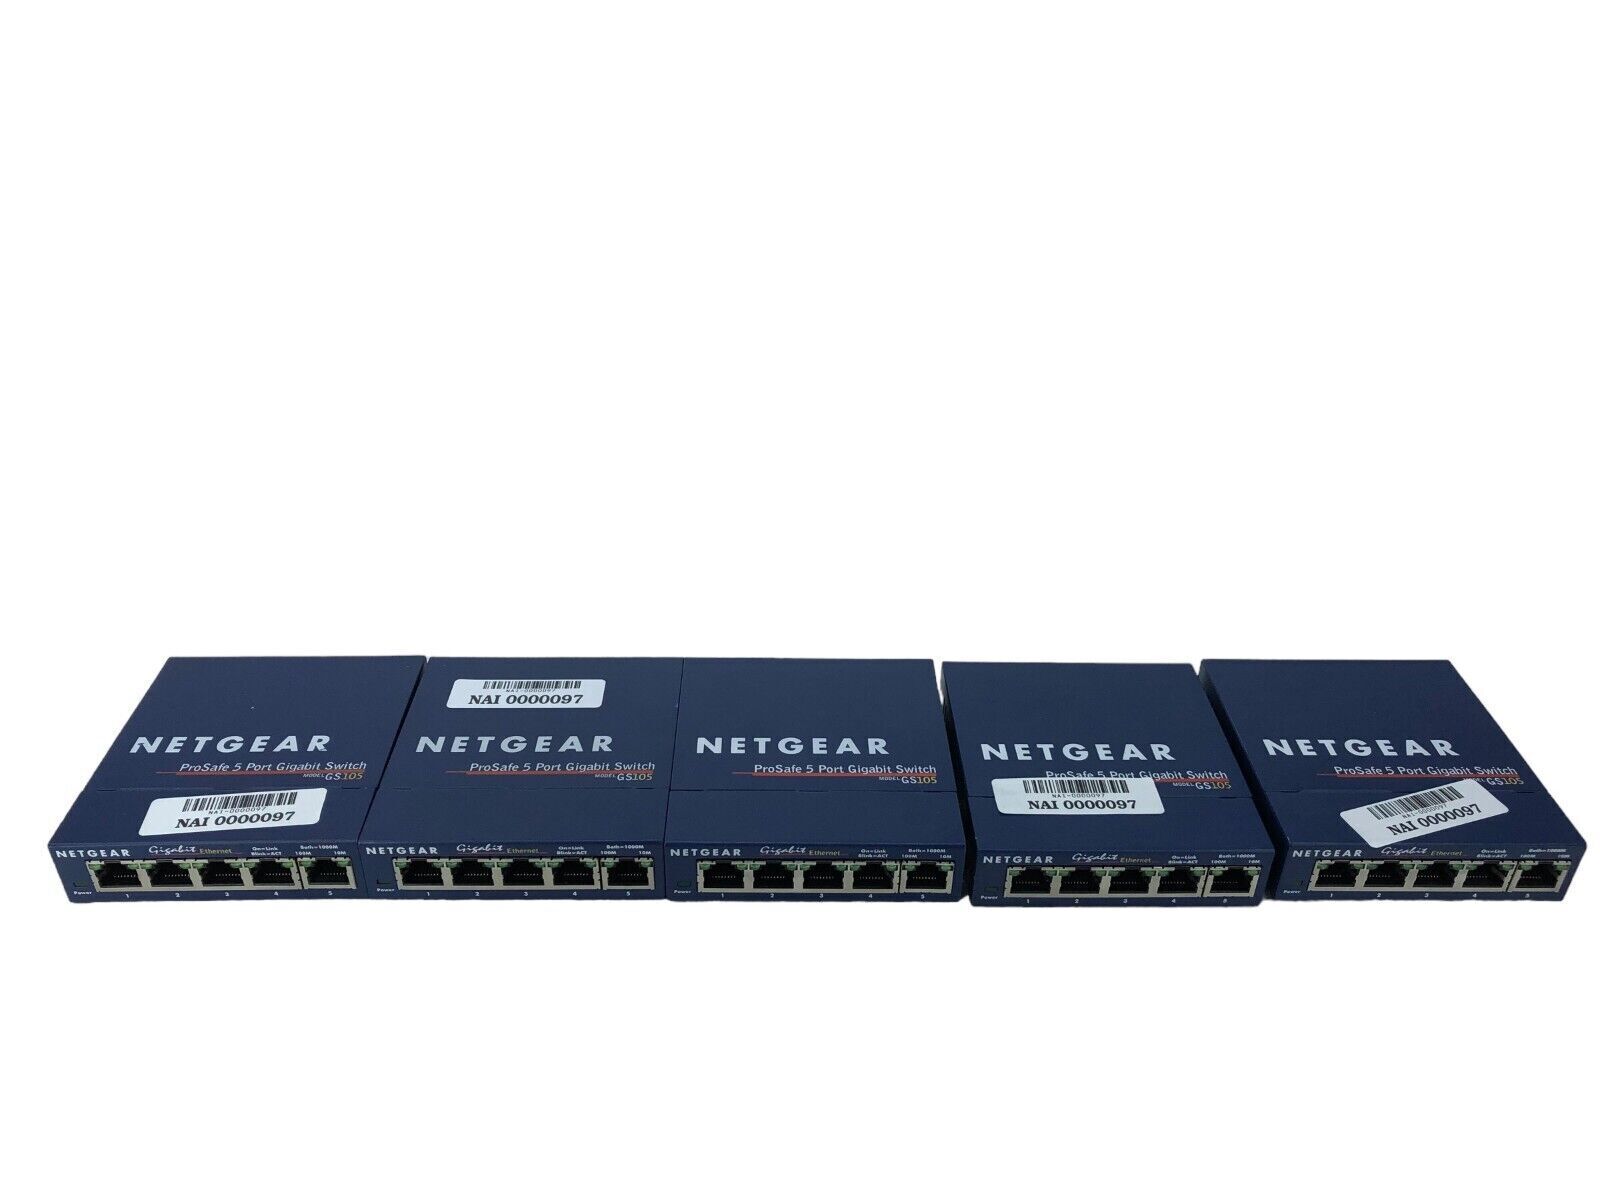 Lot of 5 NetGear GS105 v3 ProSafe 5-Port Gigabit Switch